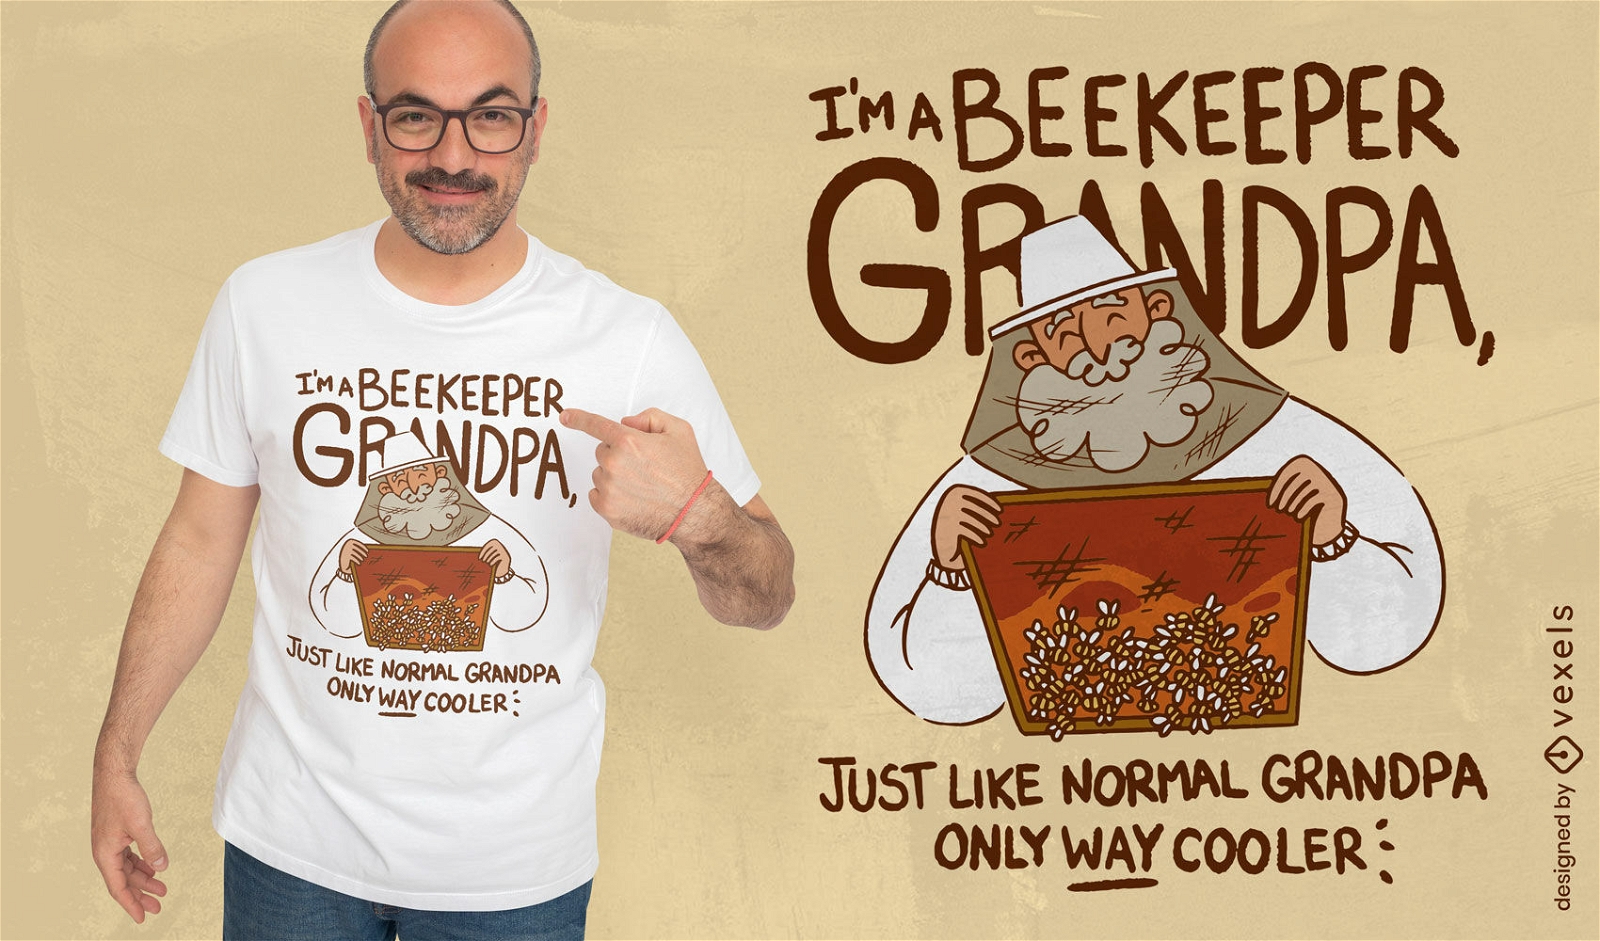 Happy beekeeper grandpa t-shirt design